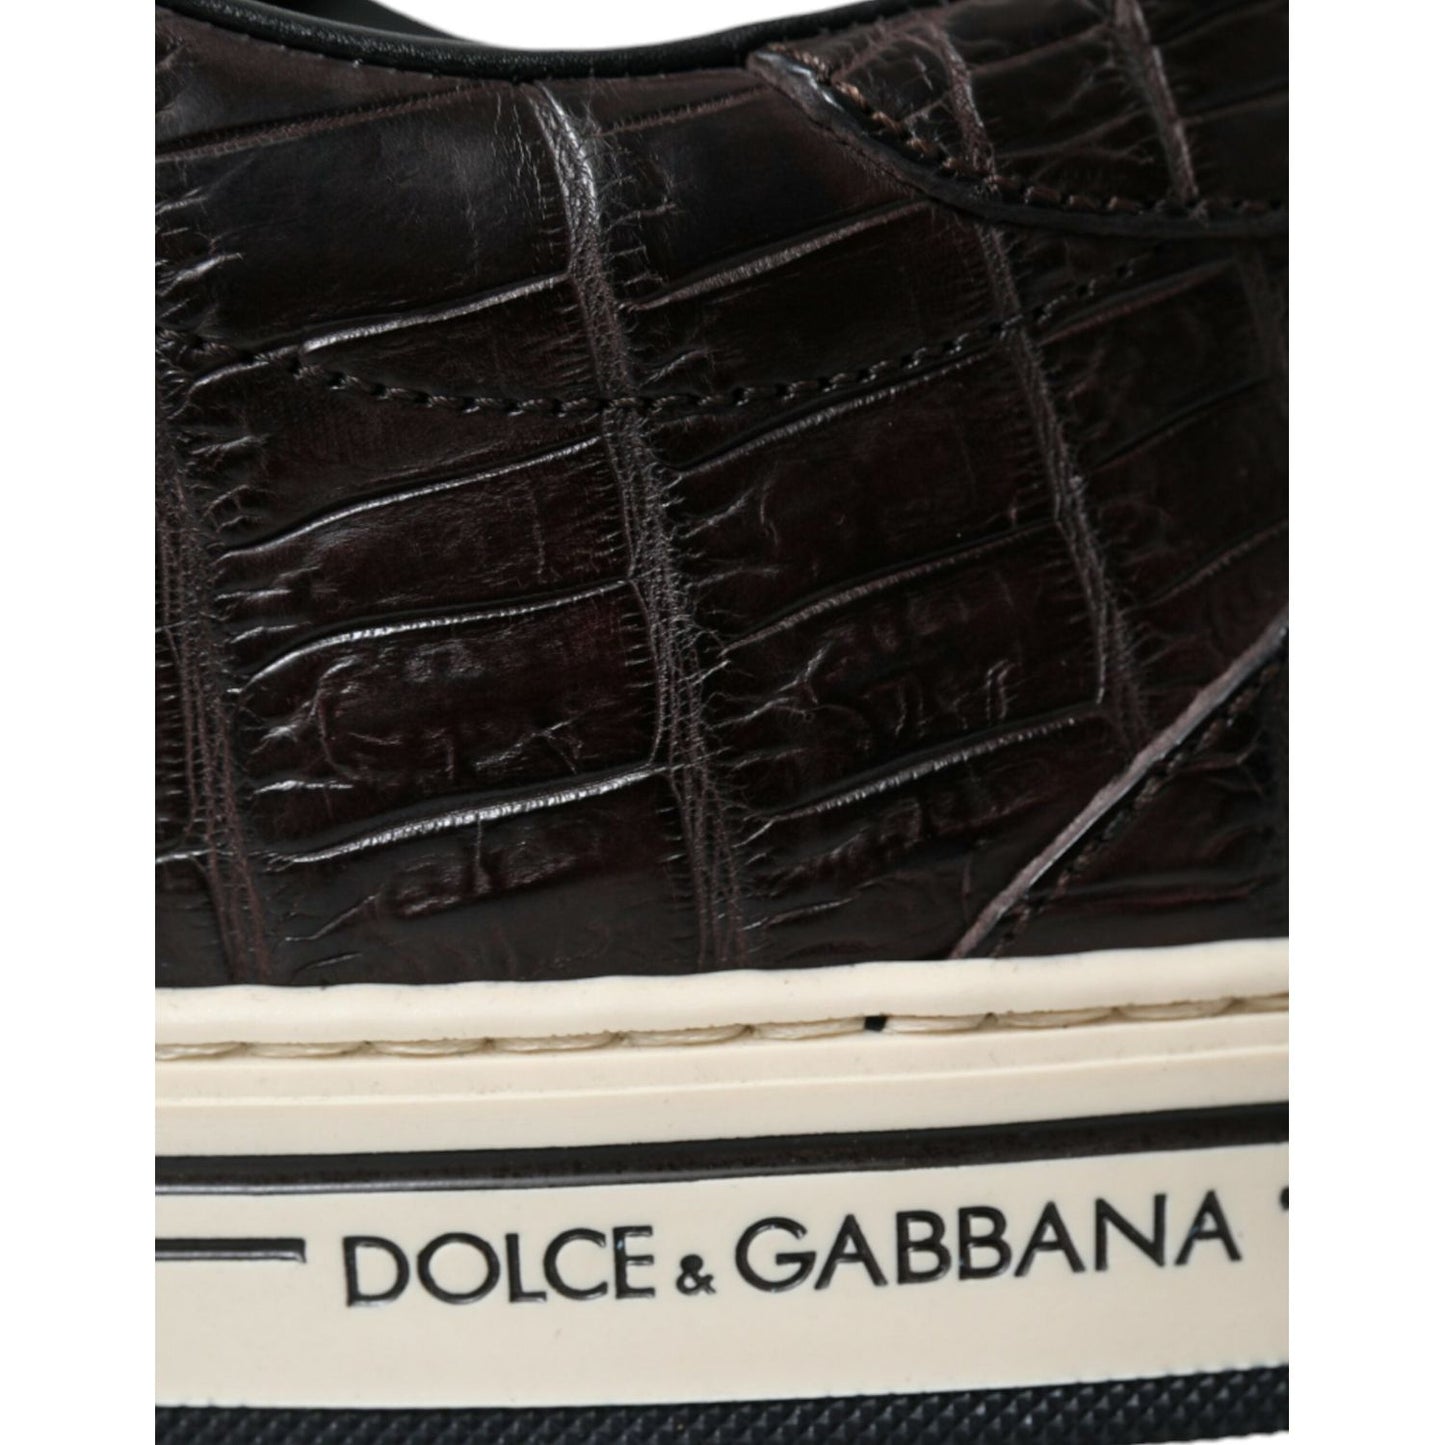 Dolce & GabbanaElegant Exotic Leather Low-Top SneakersMcRichard Designer Brands£1279.00